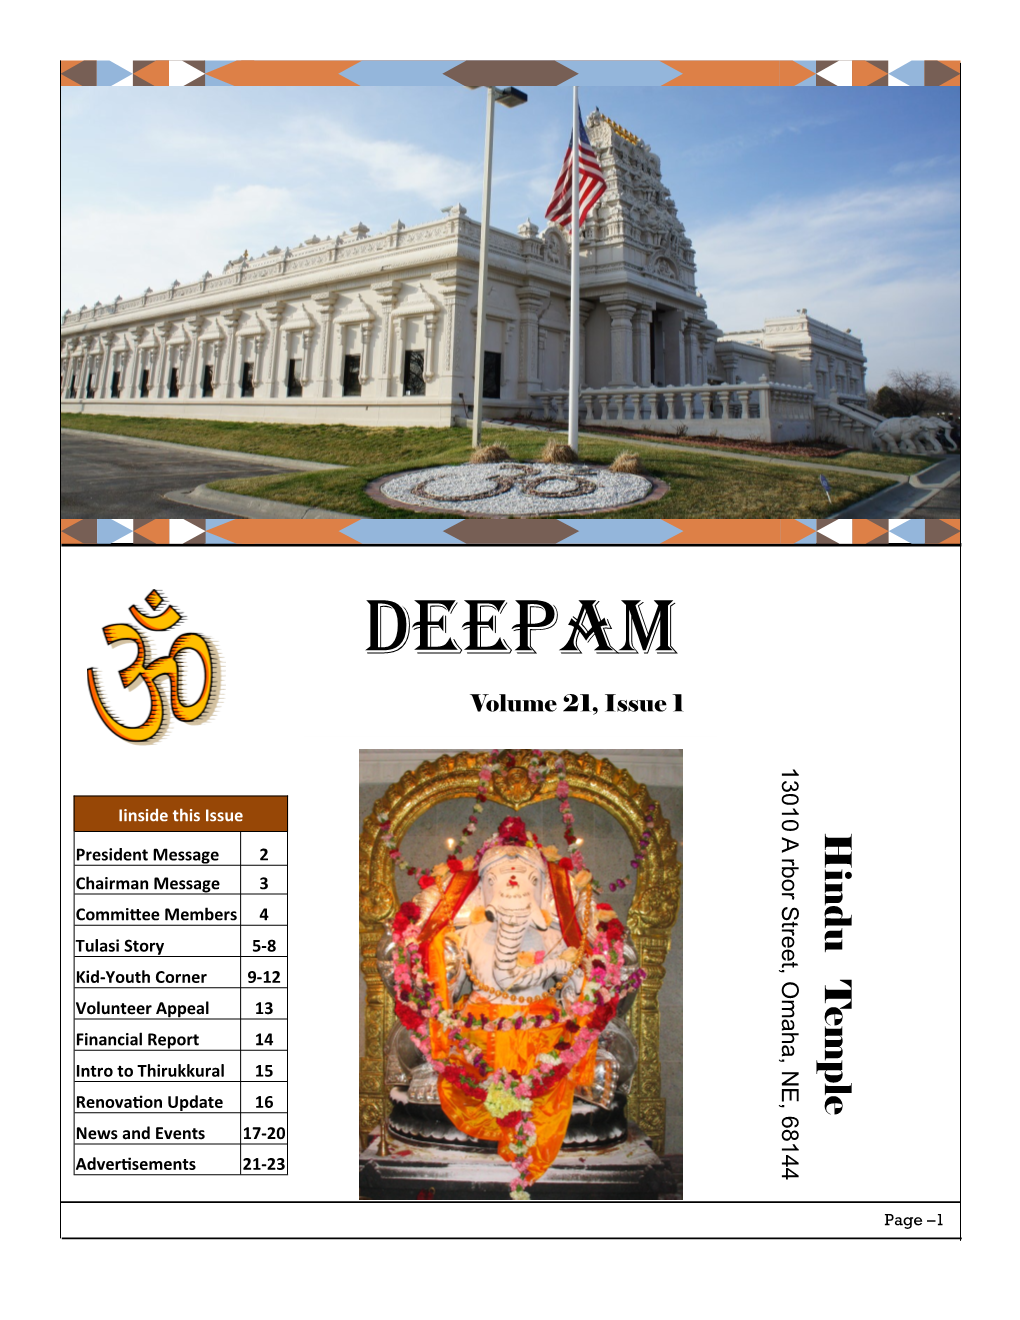 DEEPAM Volume 21, Issue 1